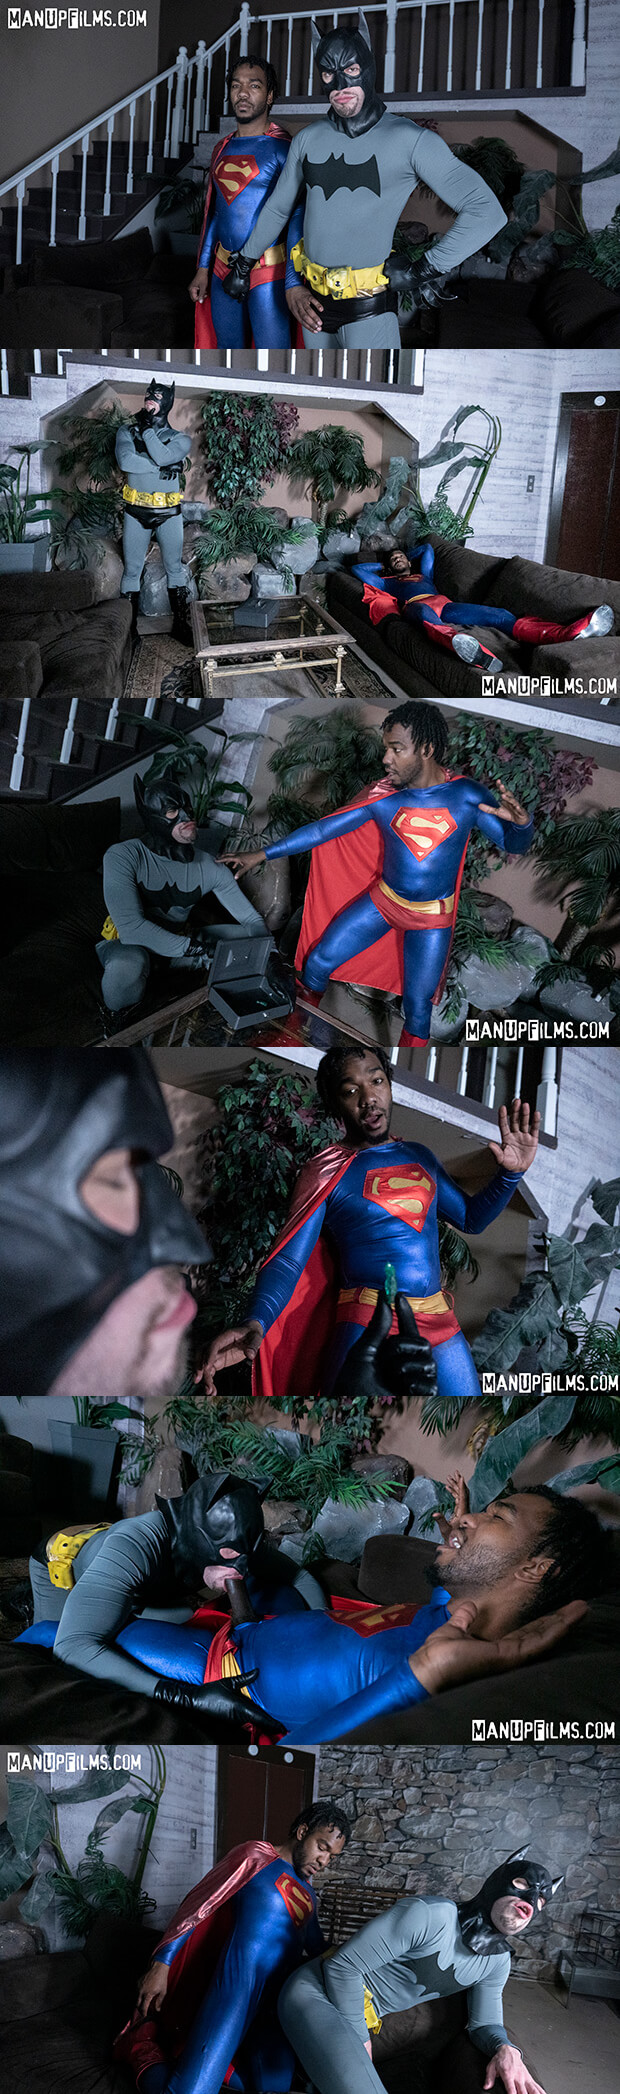 Man Up Films | Batman Seduces Superman With Kryptonite (John Johnson & Wolf Hudson)